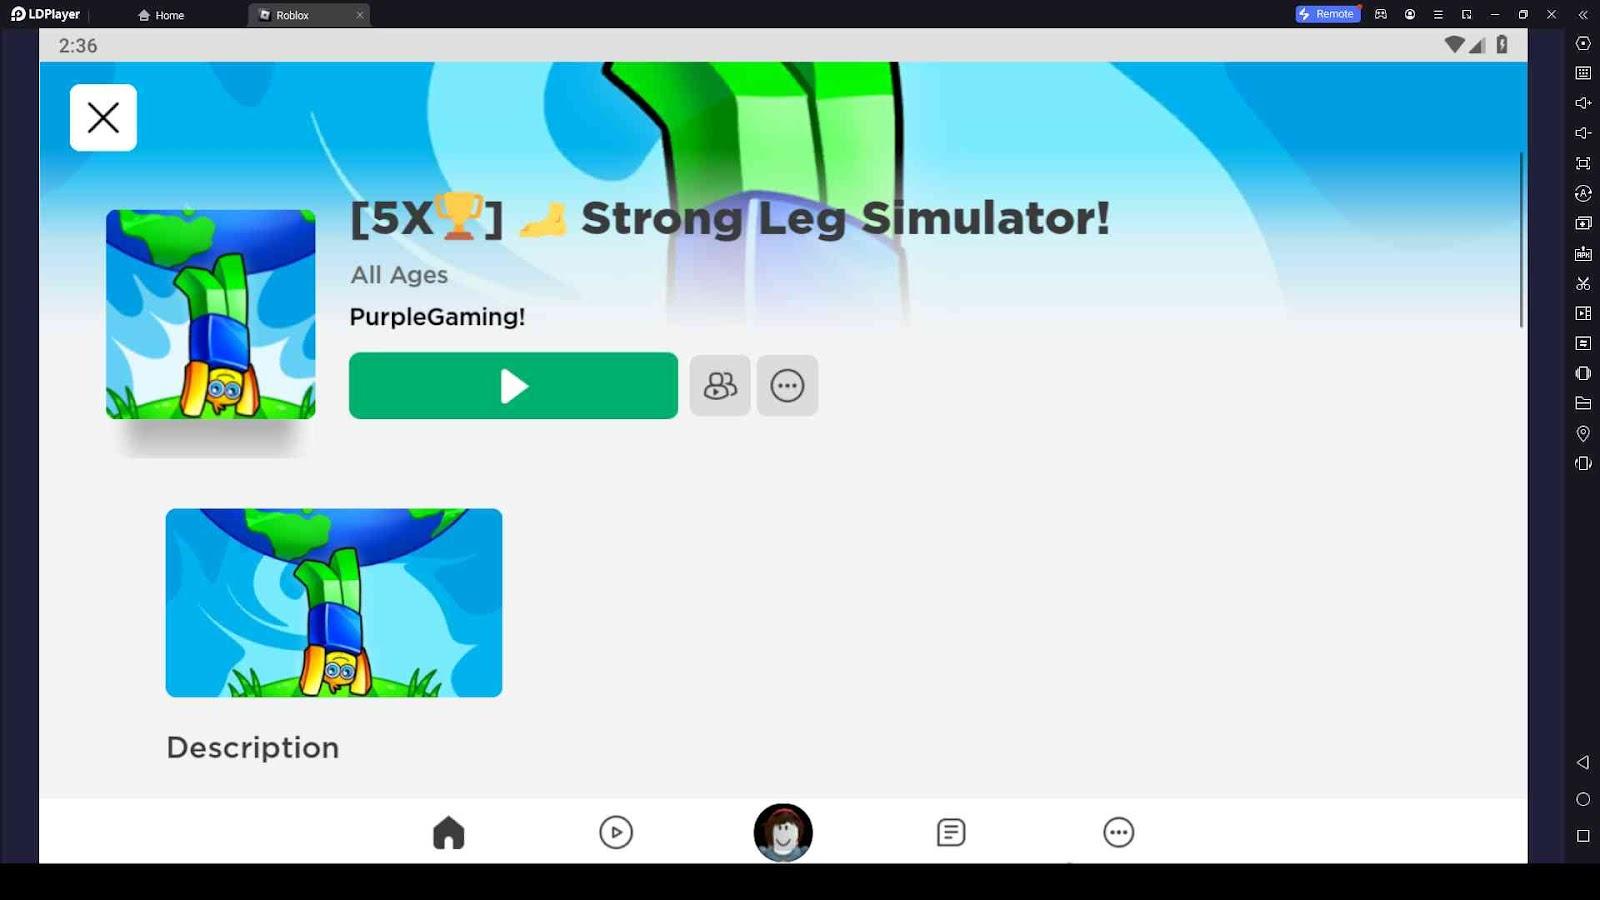 Strong Leg Simulator Codes